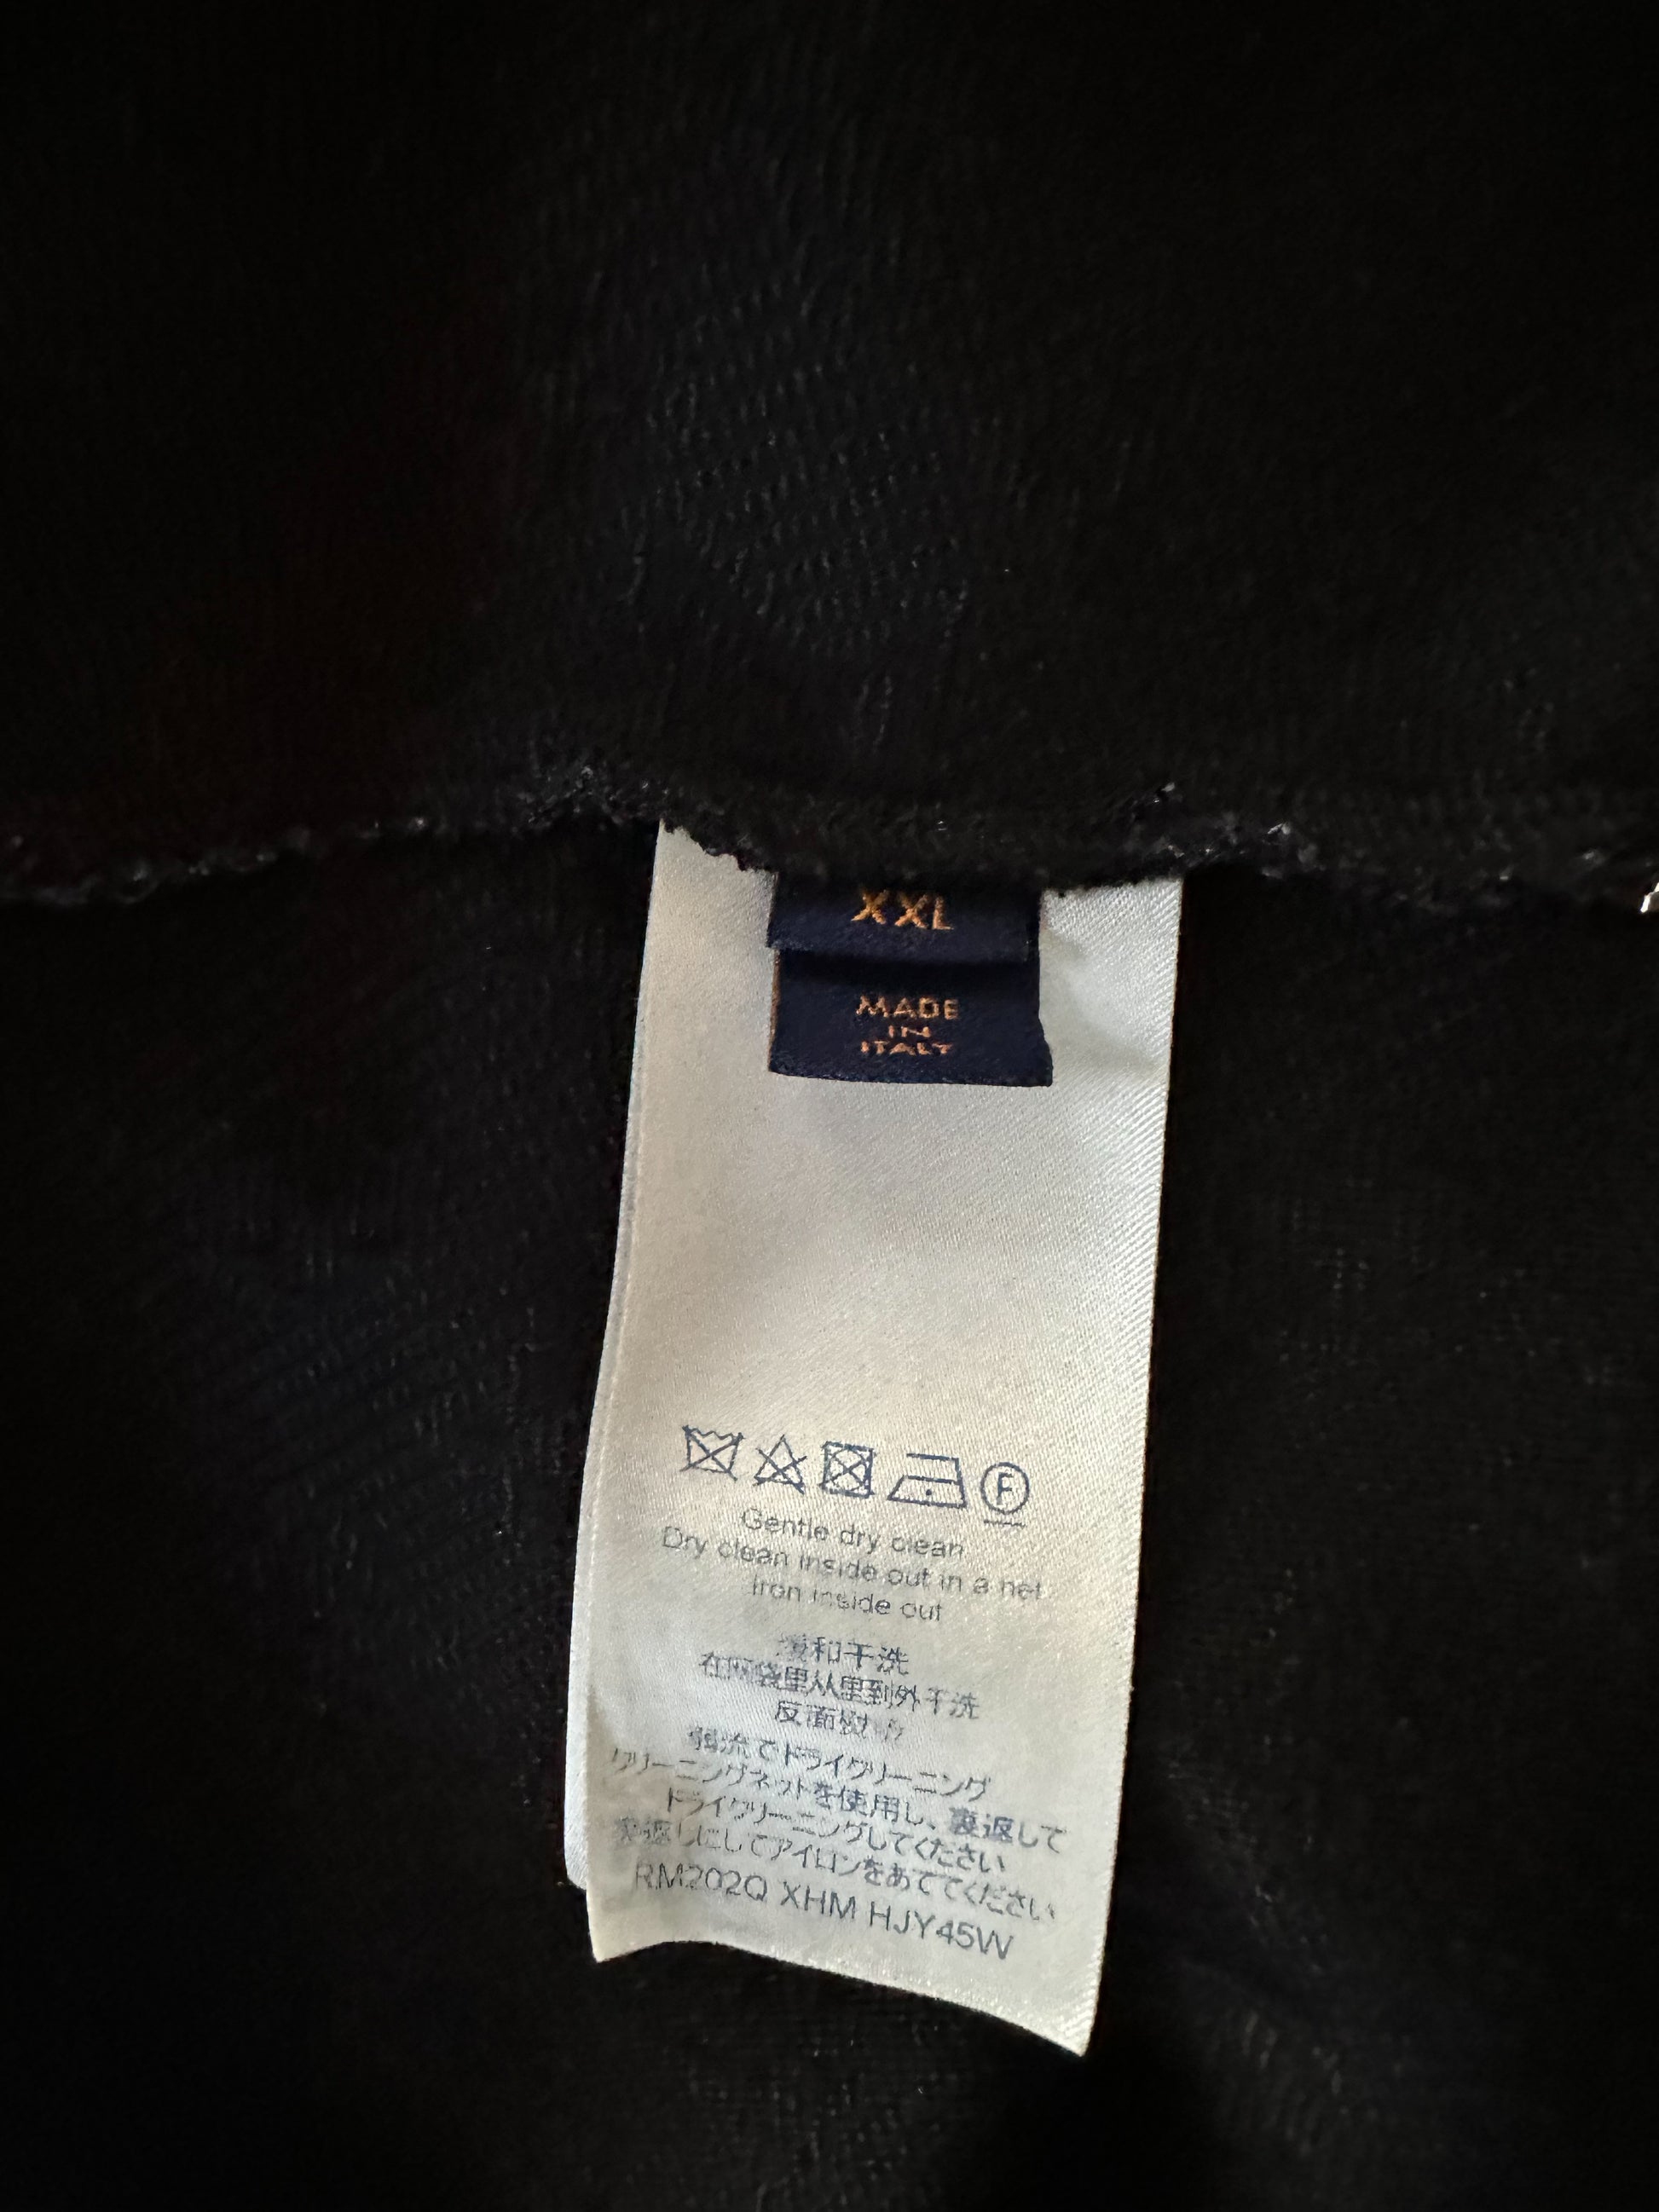 Louis Vuitton Black Monogram Track Jacket